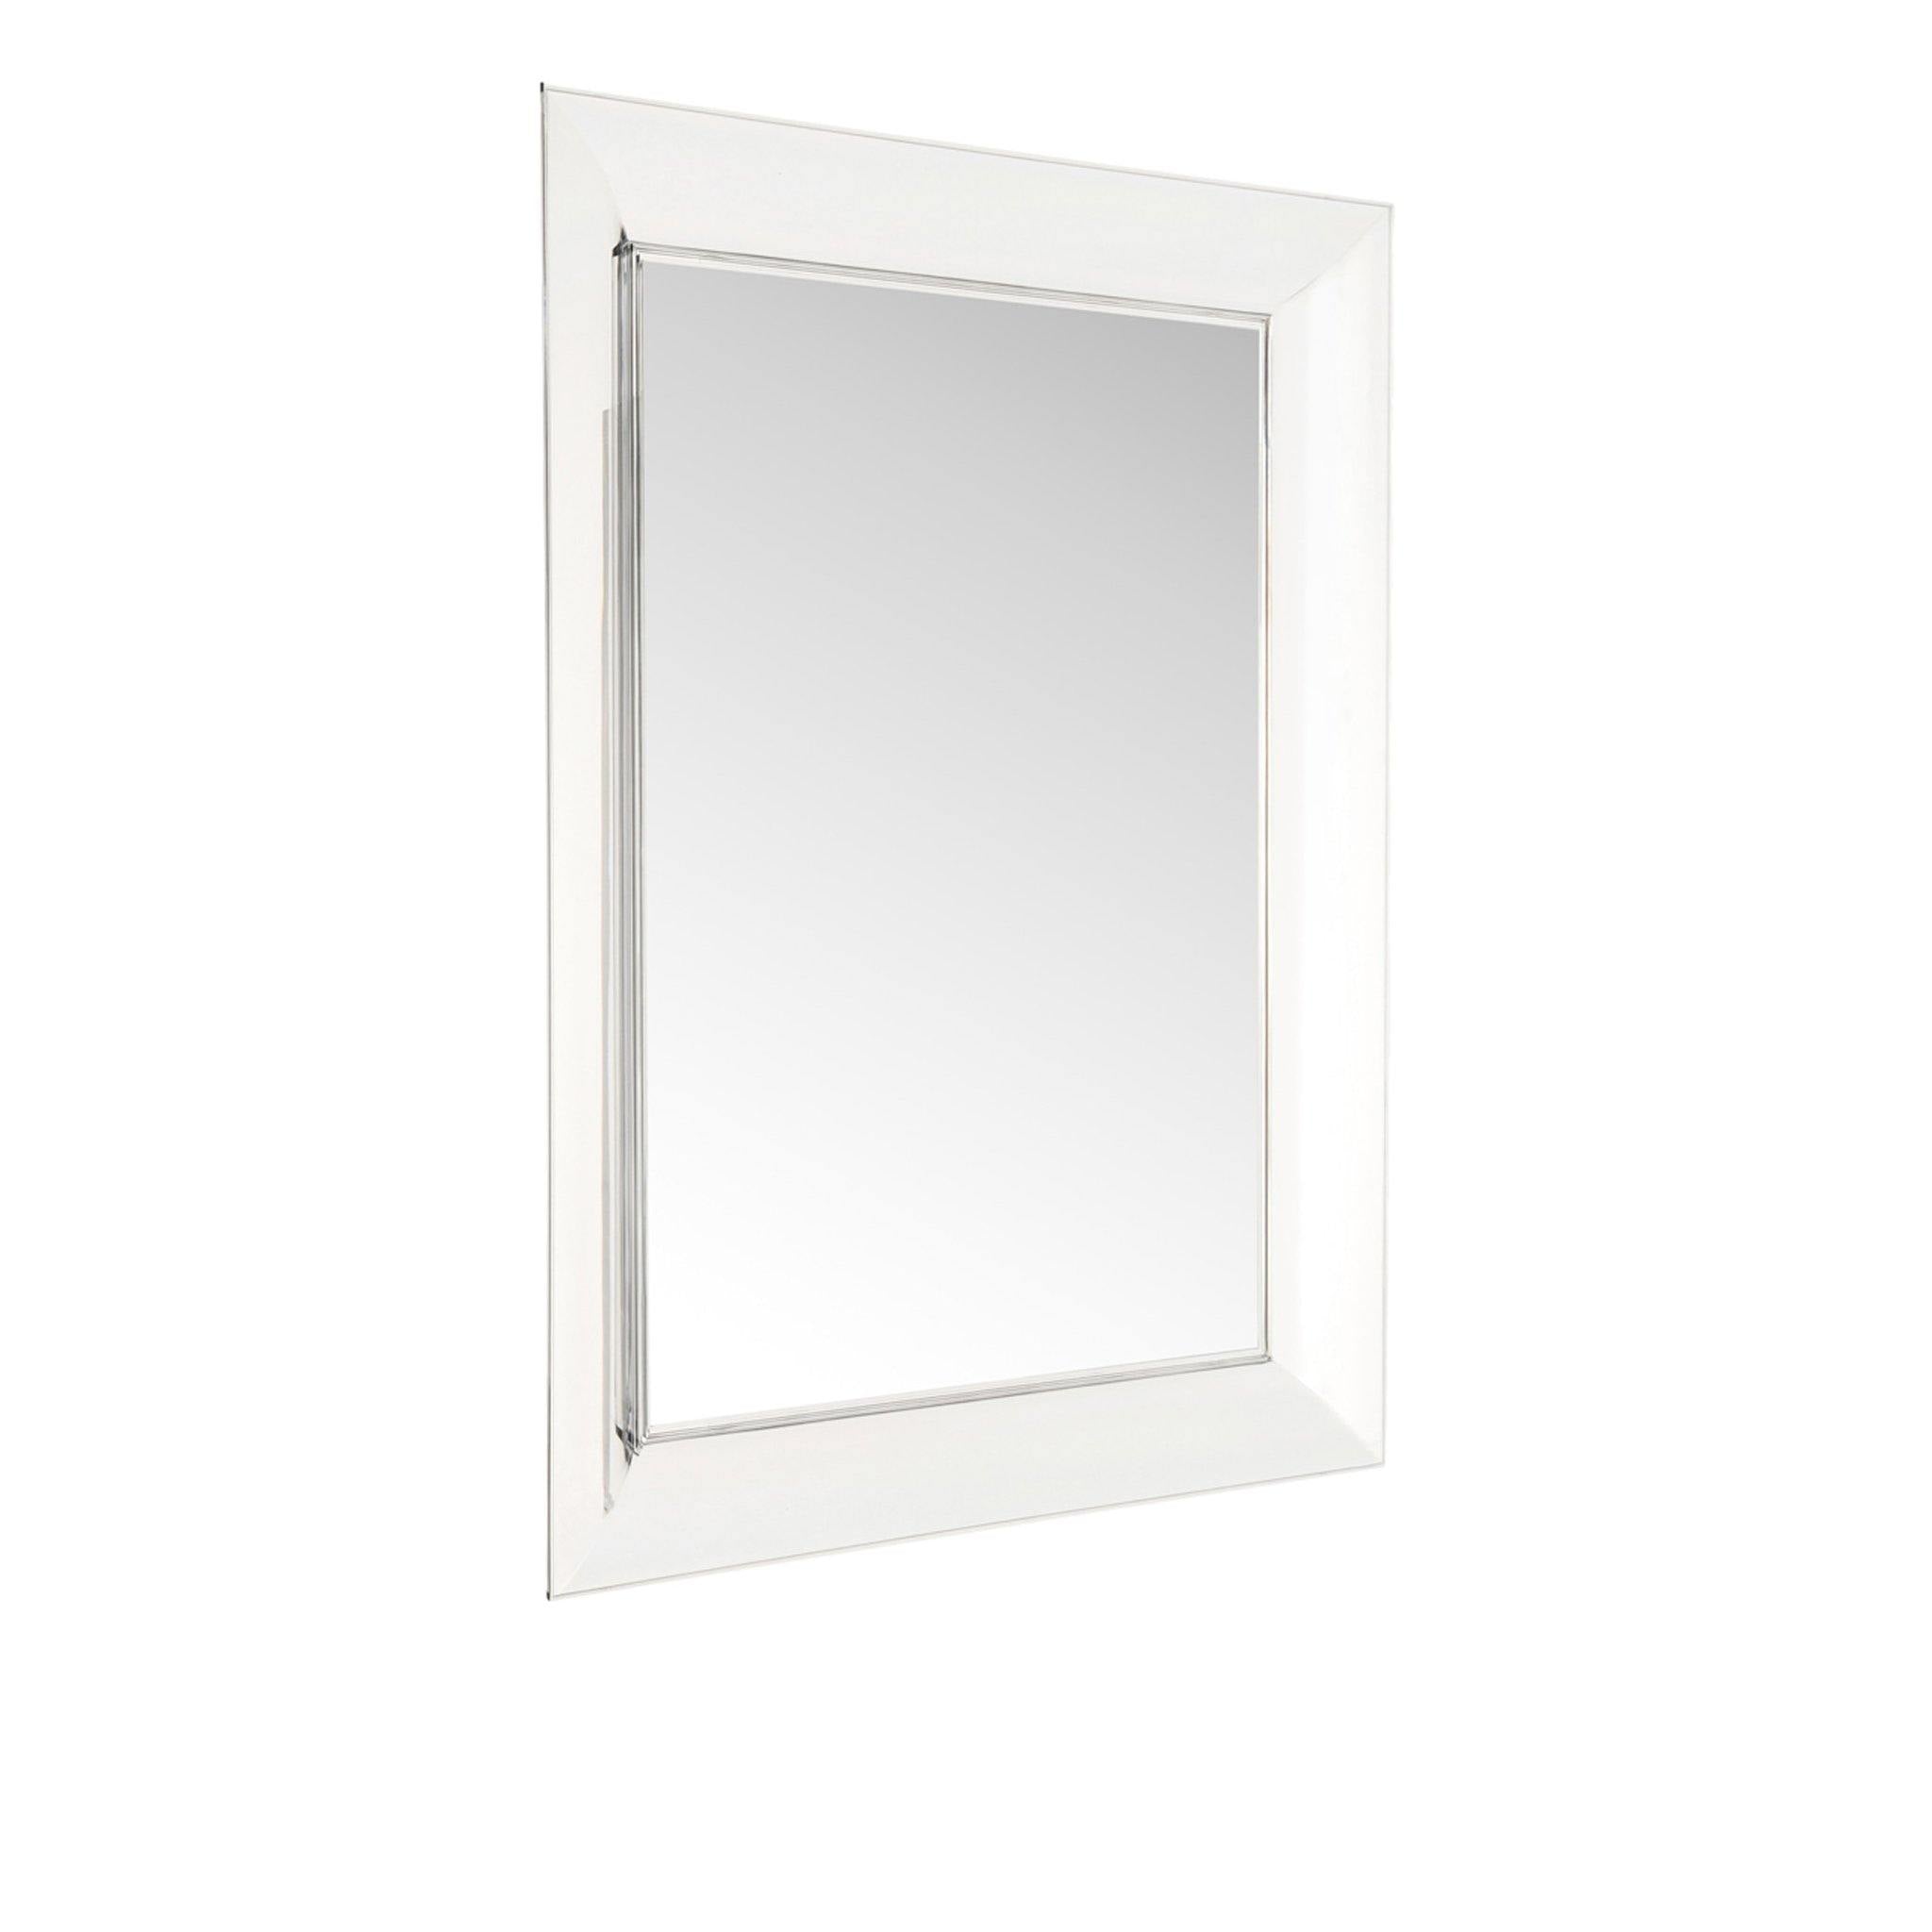 François Ghost Parlak Beyaz Ayna H:111cm - Sihir Mobilya